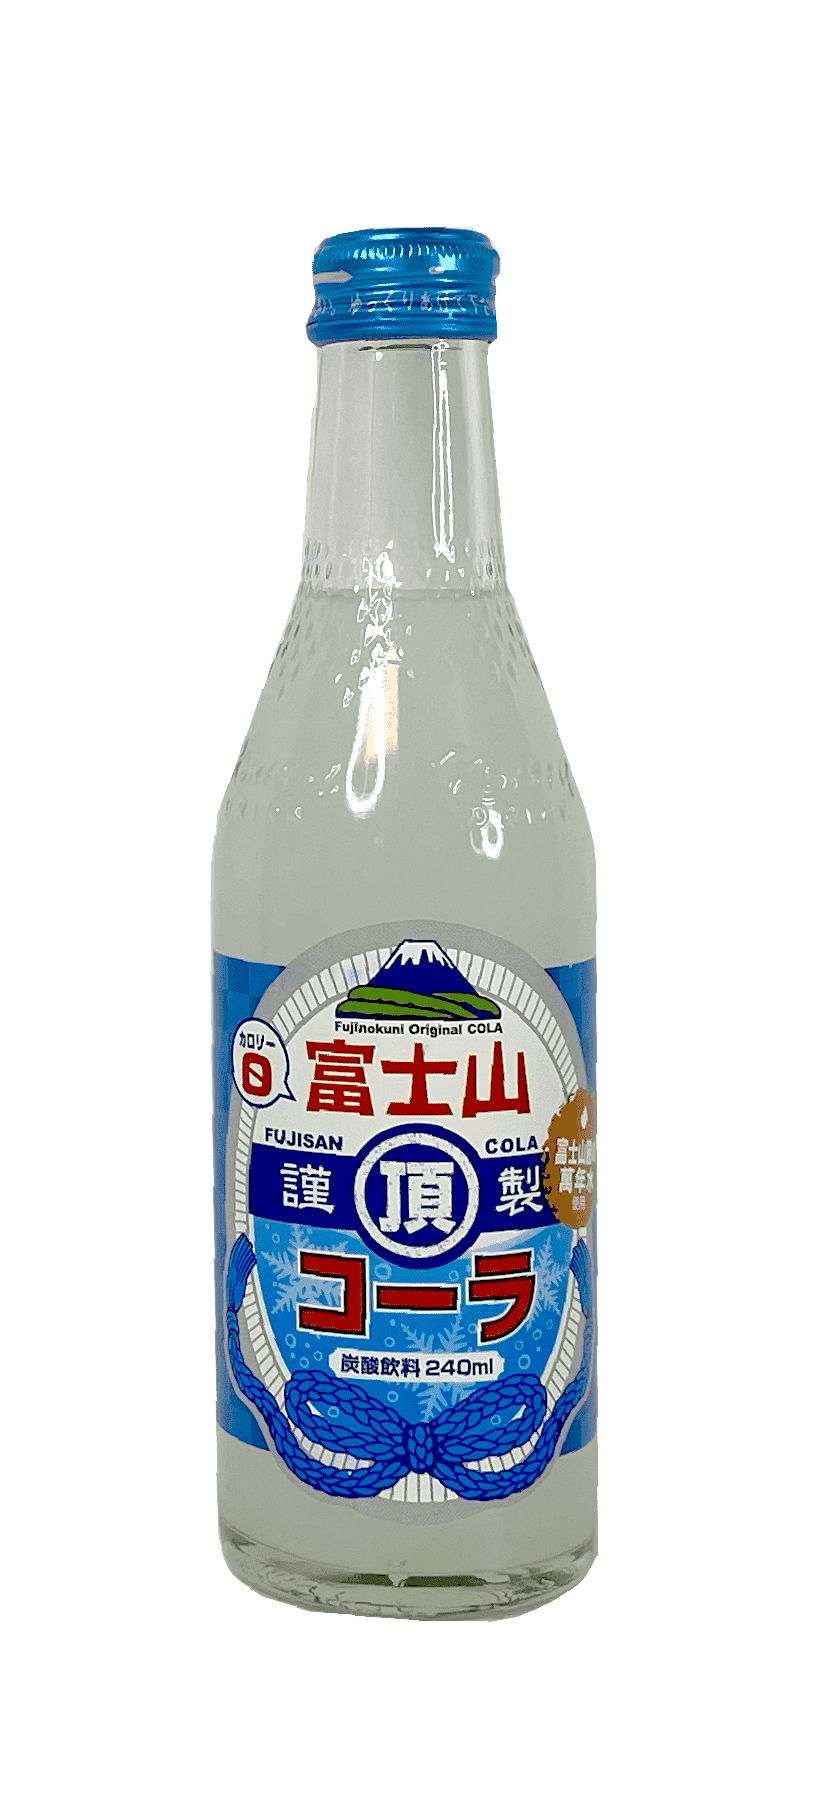 AKA-FUJI Cider Med Cola Smak 240ml MT.Fuji Japan